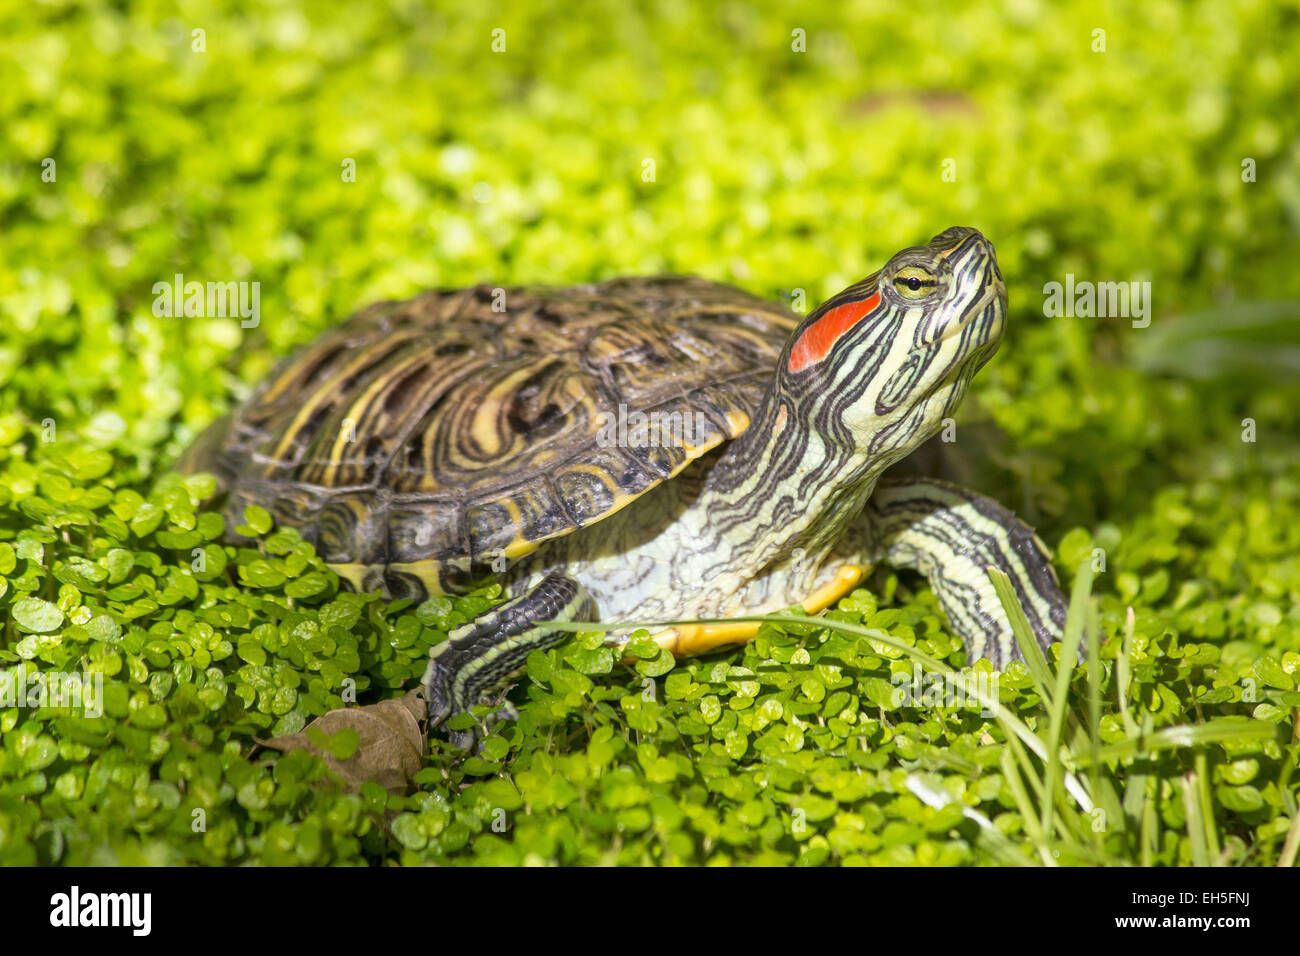 Red eared slider - Trachemys scripta elegans, Turtle head portrait in nature enviroment Stock Photo